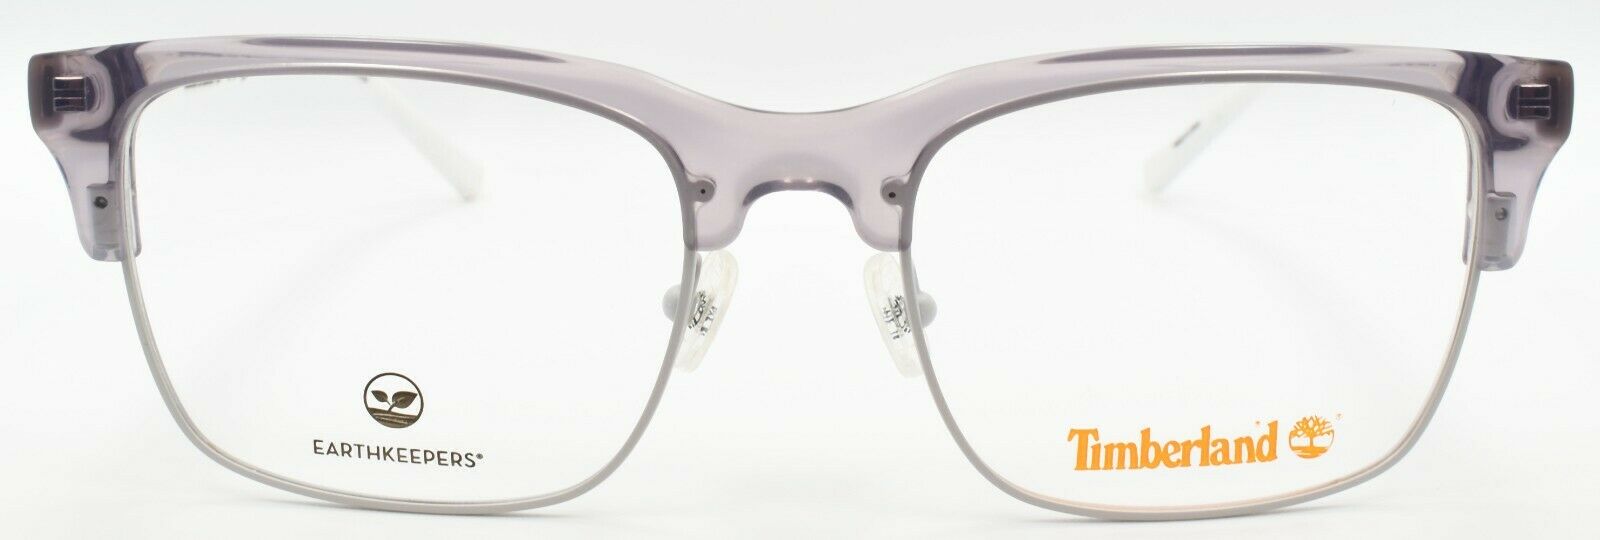 2-TIMBERLAND TB1601 020 Men's Eyeglasses Frames 53-19-145 Grey / White-664689964239-IKSpecs